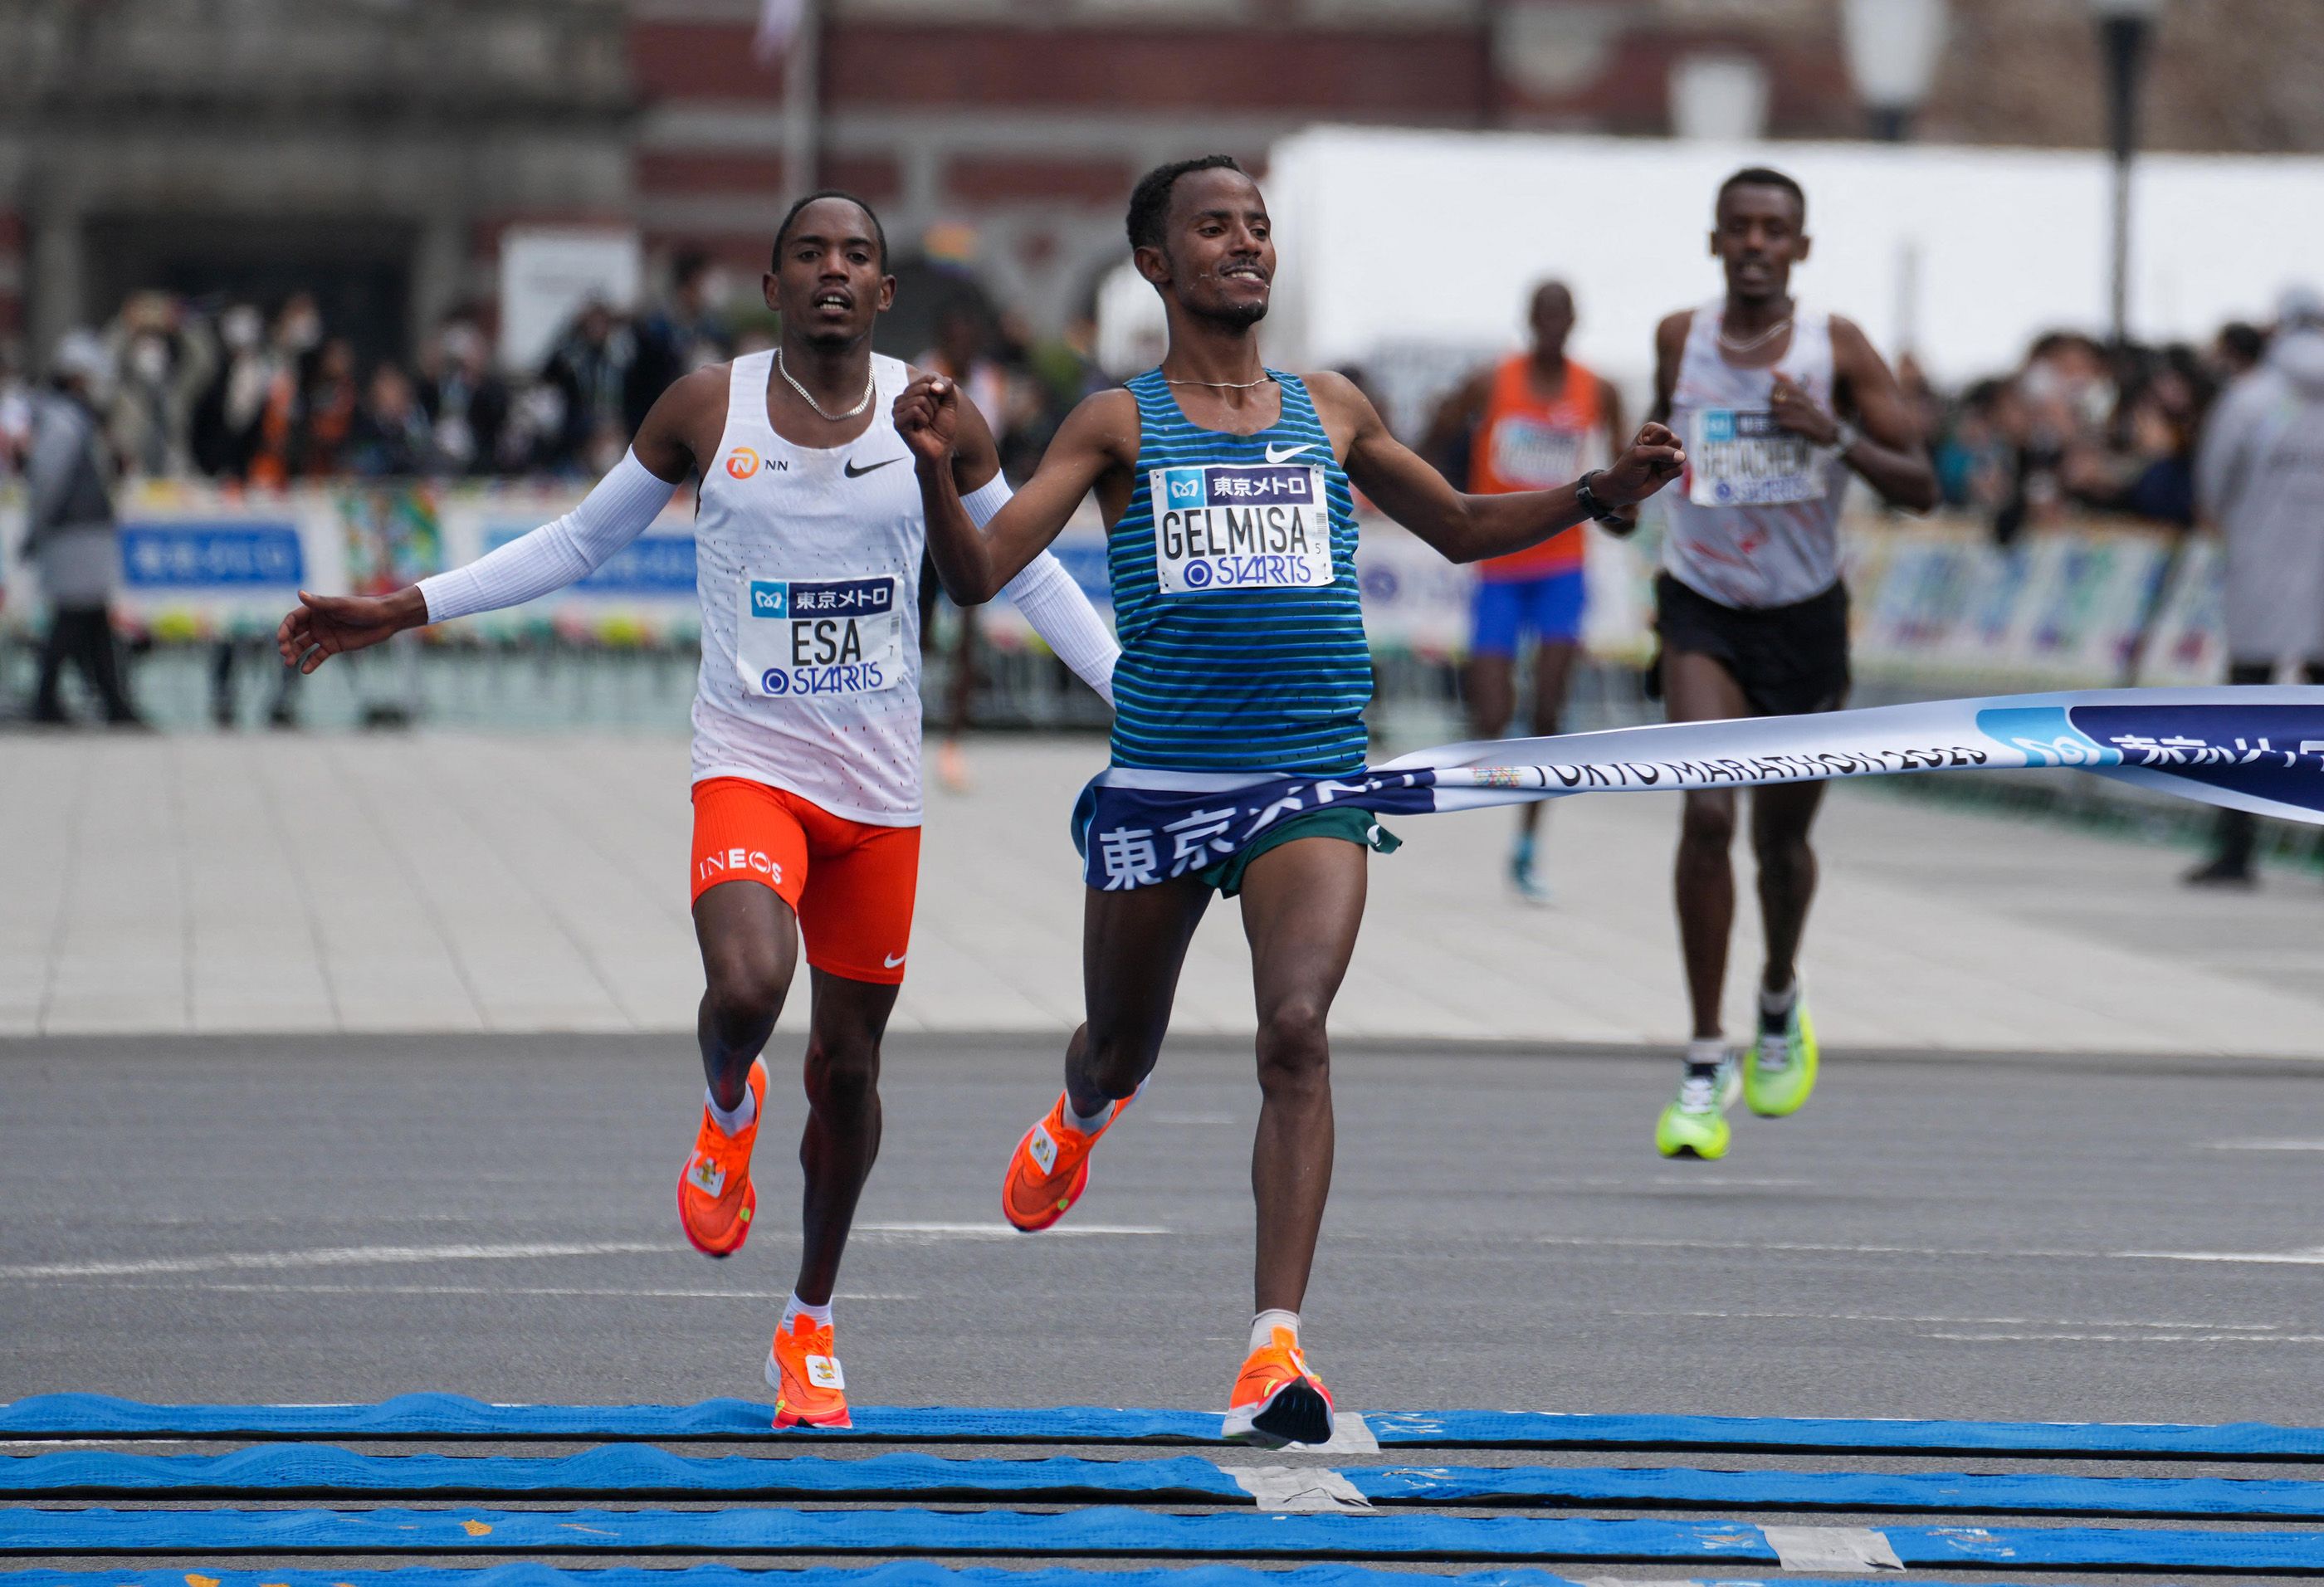 Deso Gelmisa pips Mohamed Esa to win the Tokyo Marathon